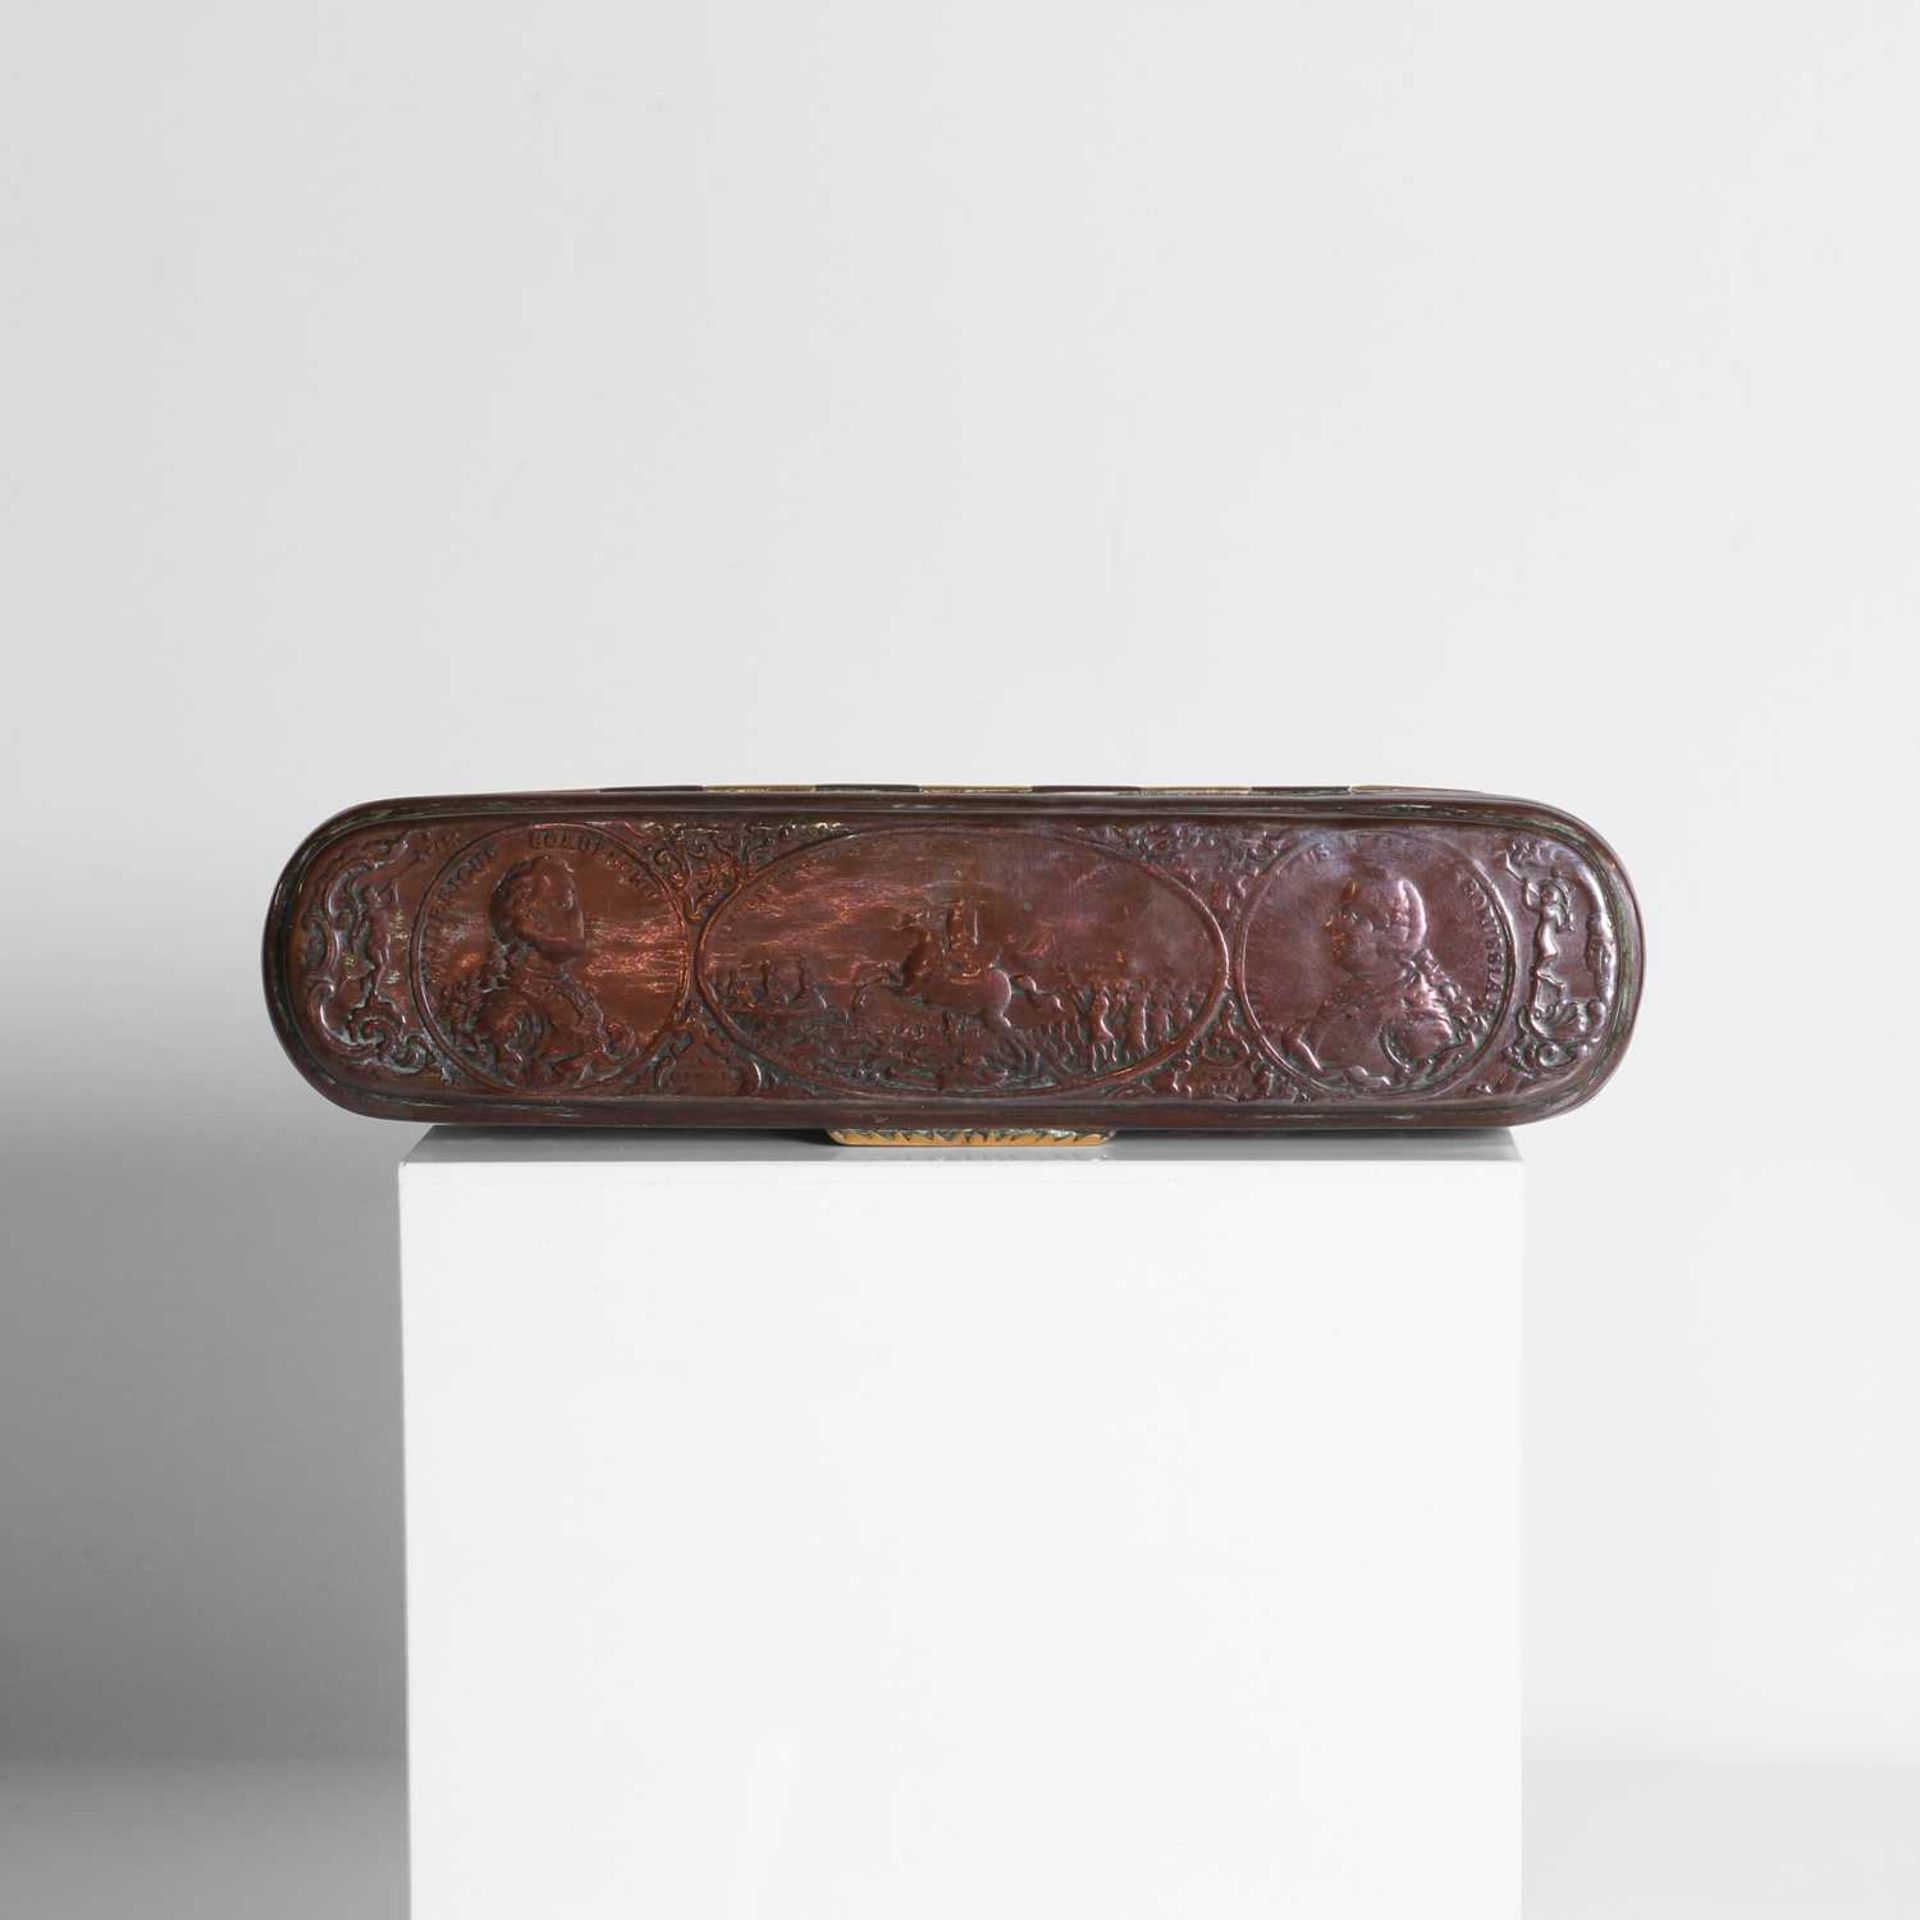 A copper and brass tobacco box, - Image 2 of 6